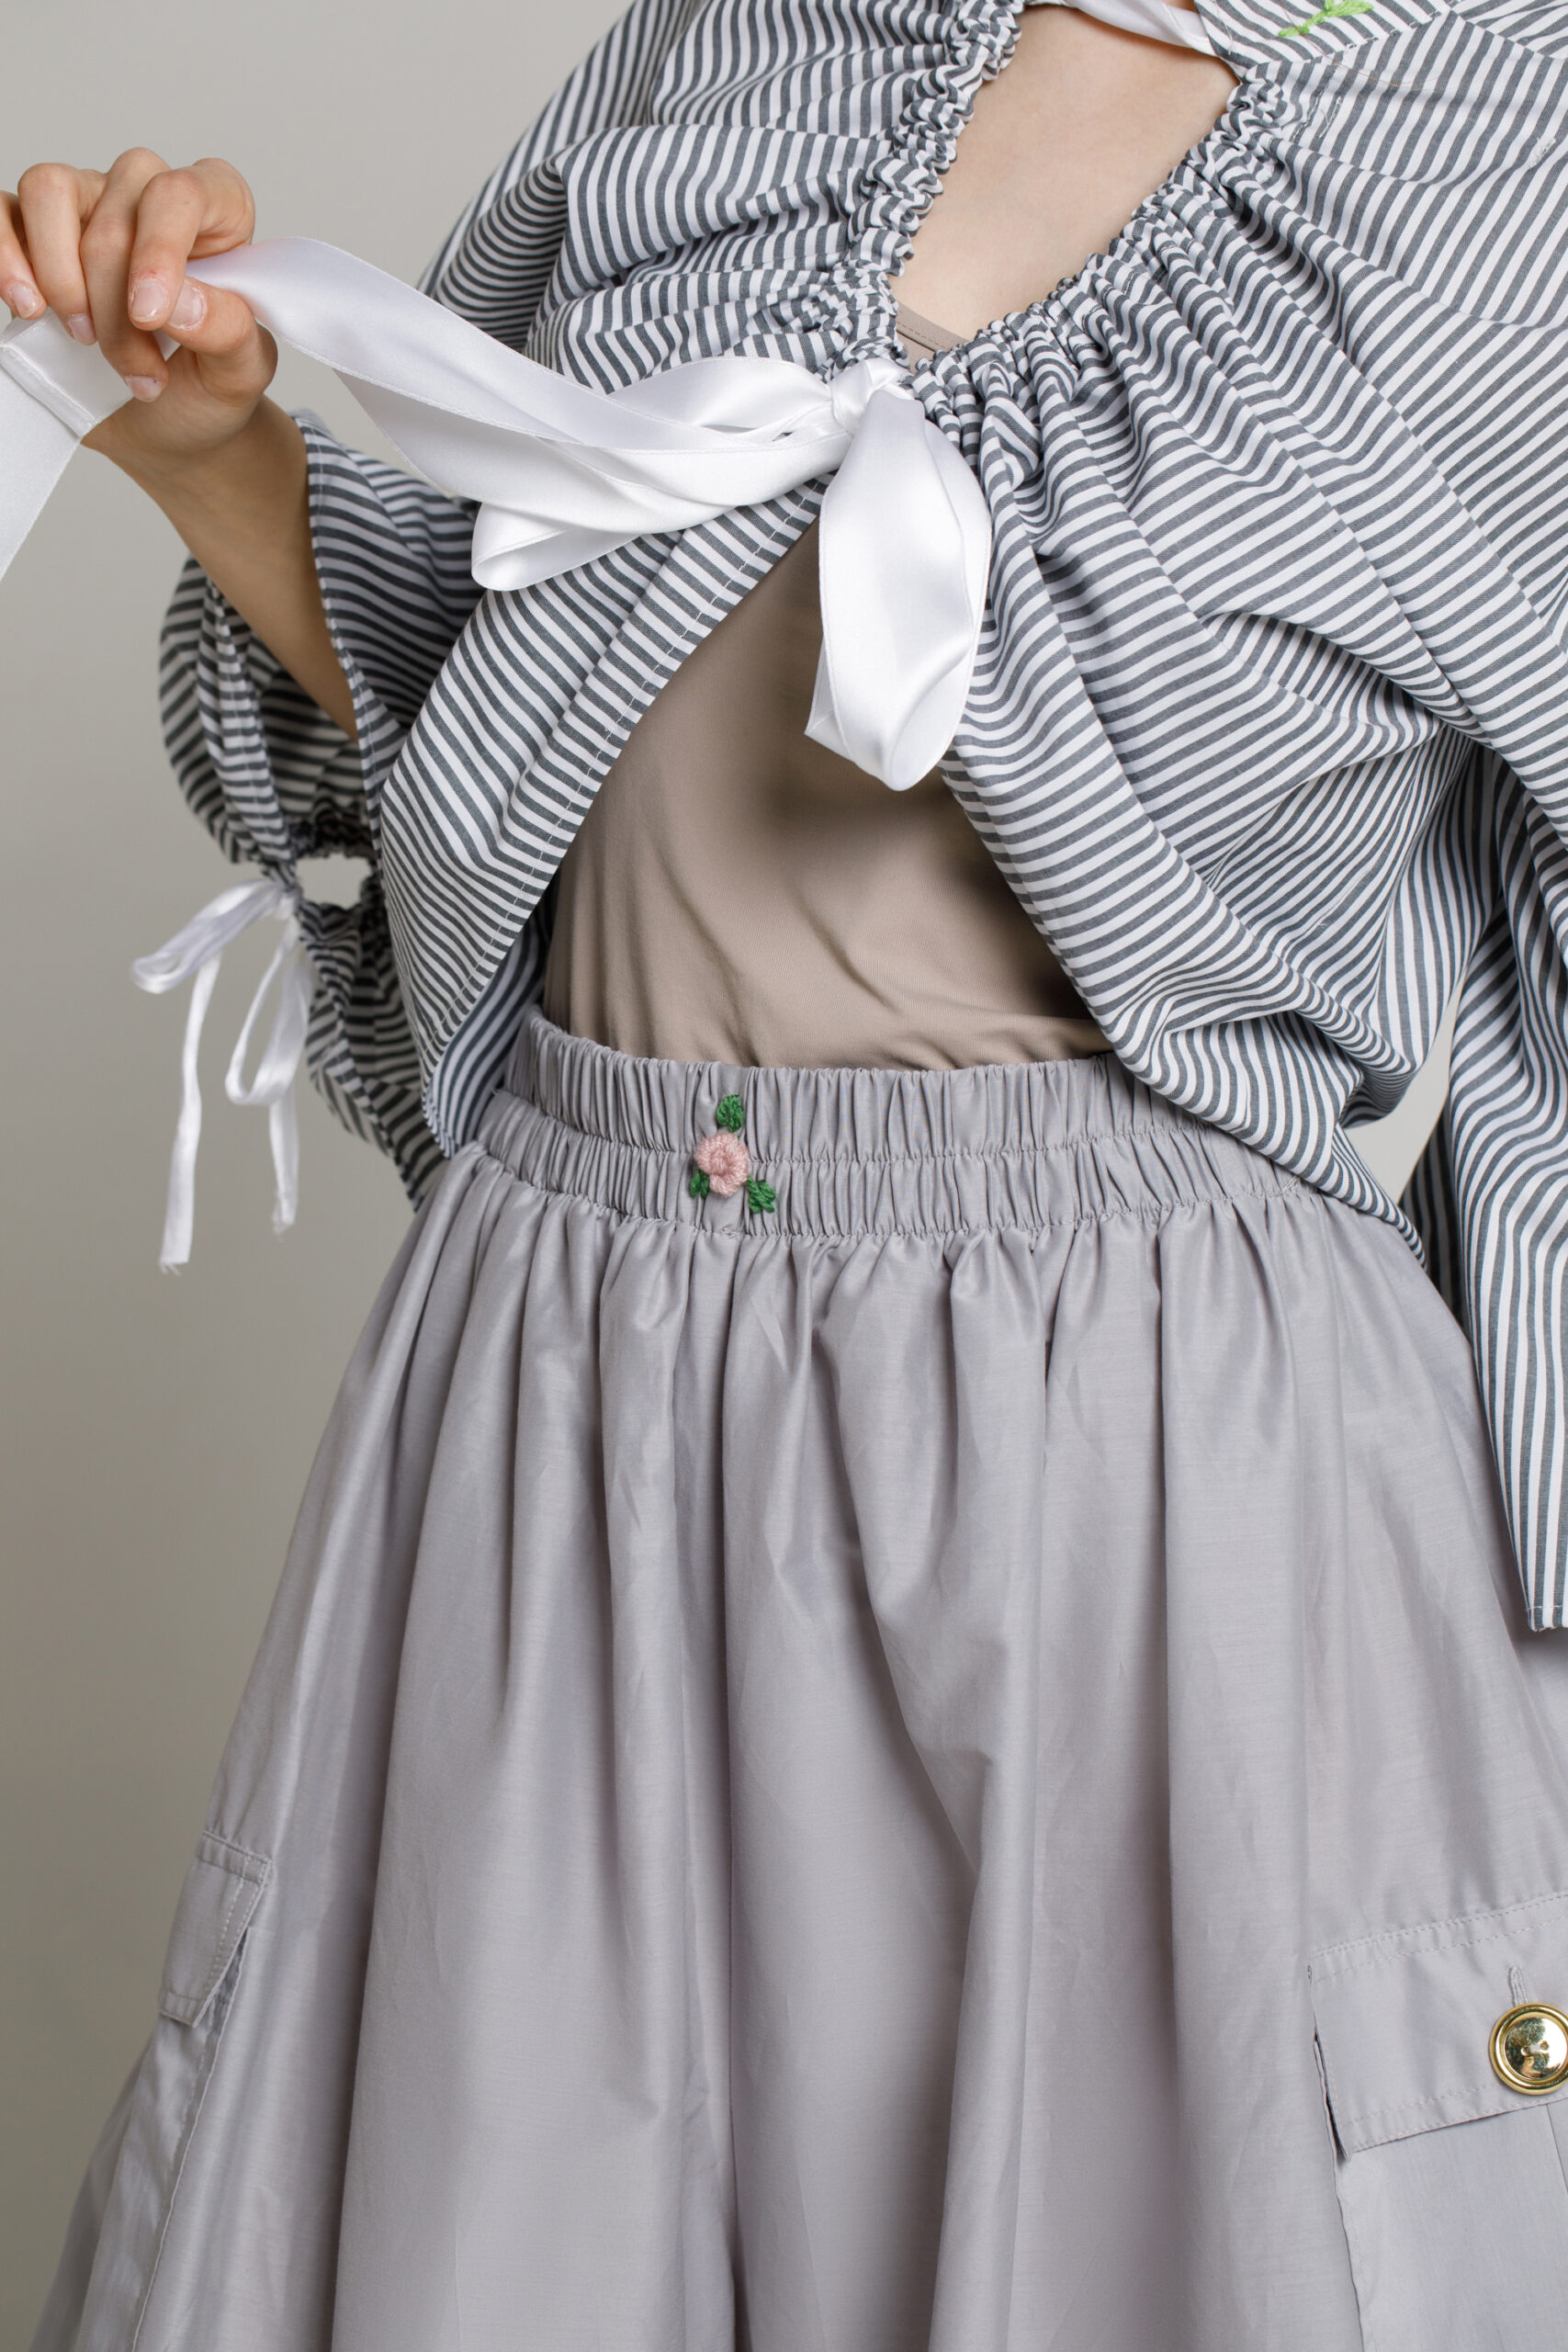 Bluza PATTY dungi versatila cu doua fete din poplin. Materiale naturale, design unicat, cu broderie si aplicatii handmade